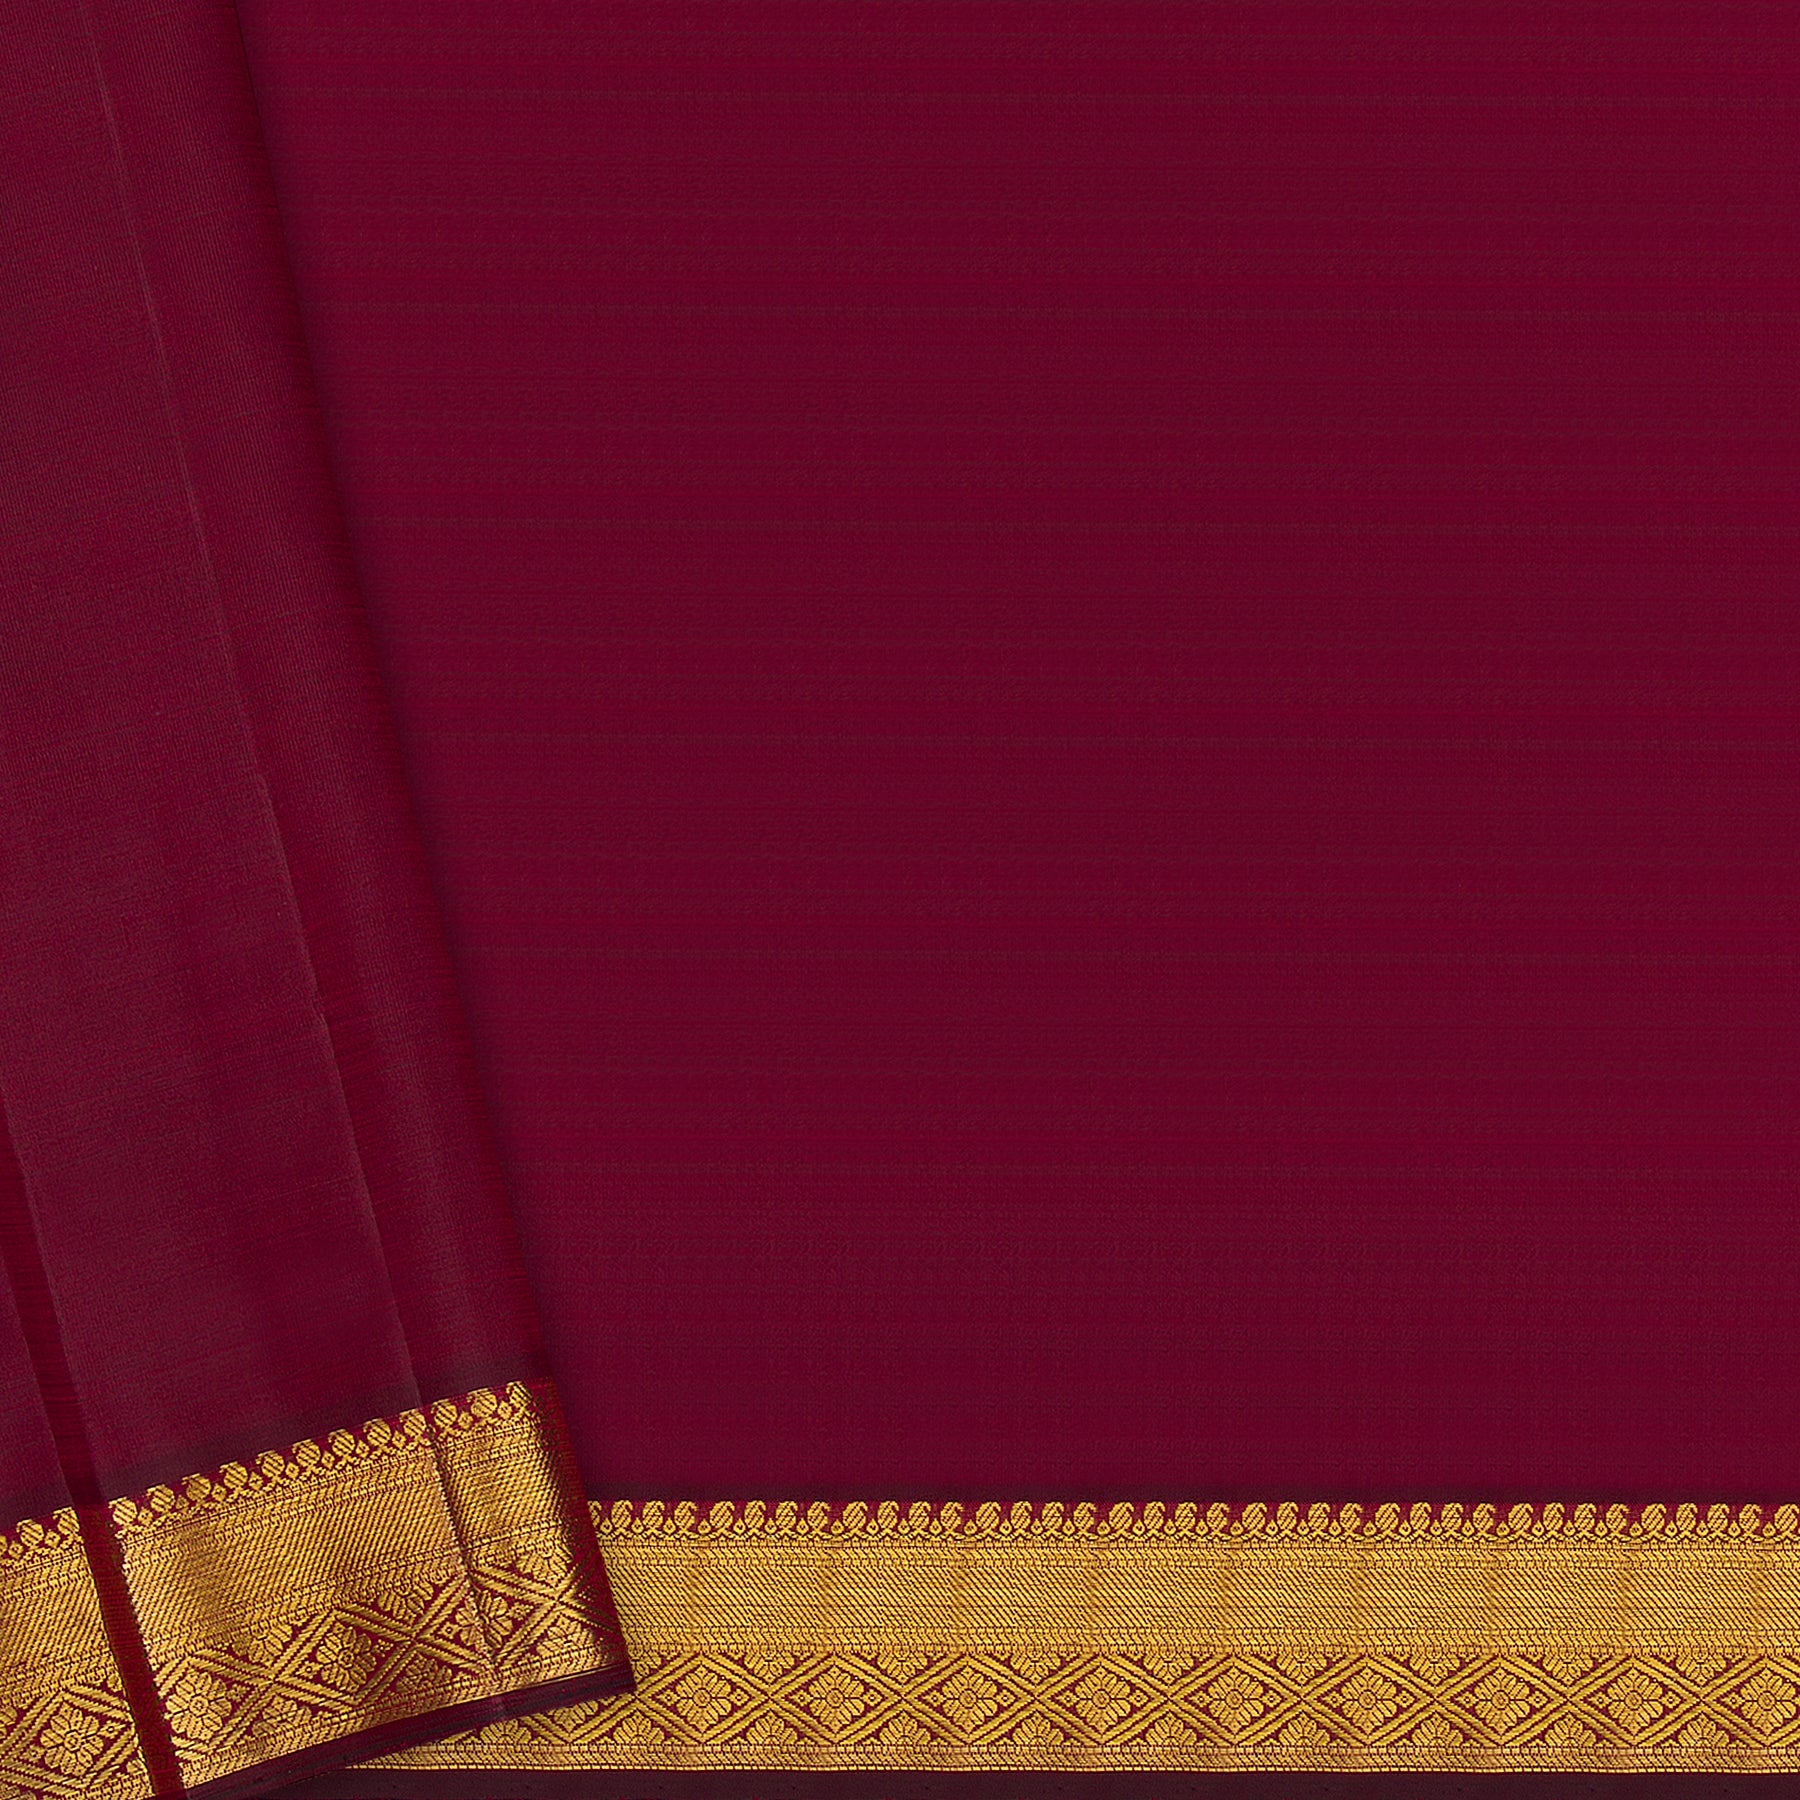 Kanakavalli Kanjivaram Silk Sari 23-611-HS001-14472 - Blouse View